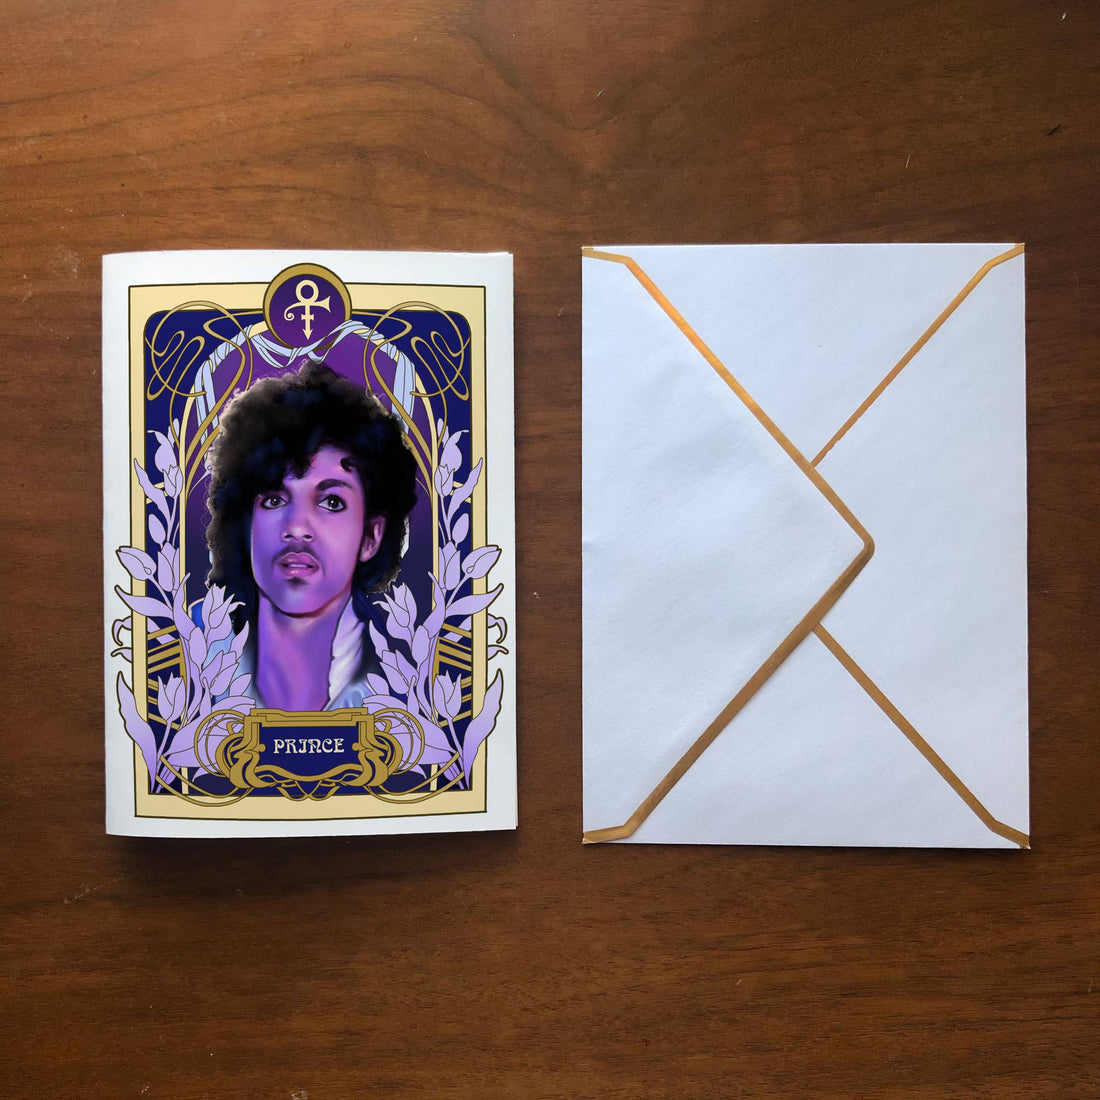 Prince - Greeting Card - Kobi Co.